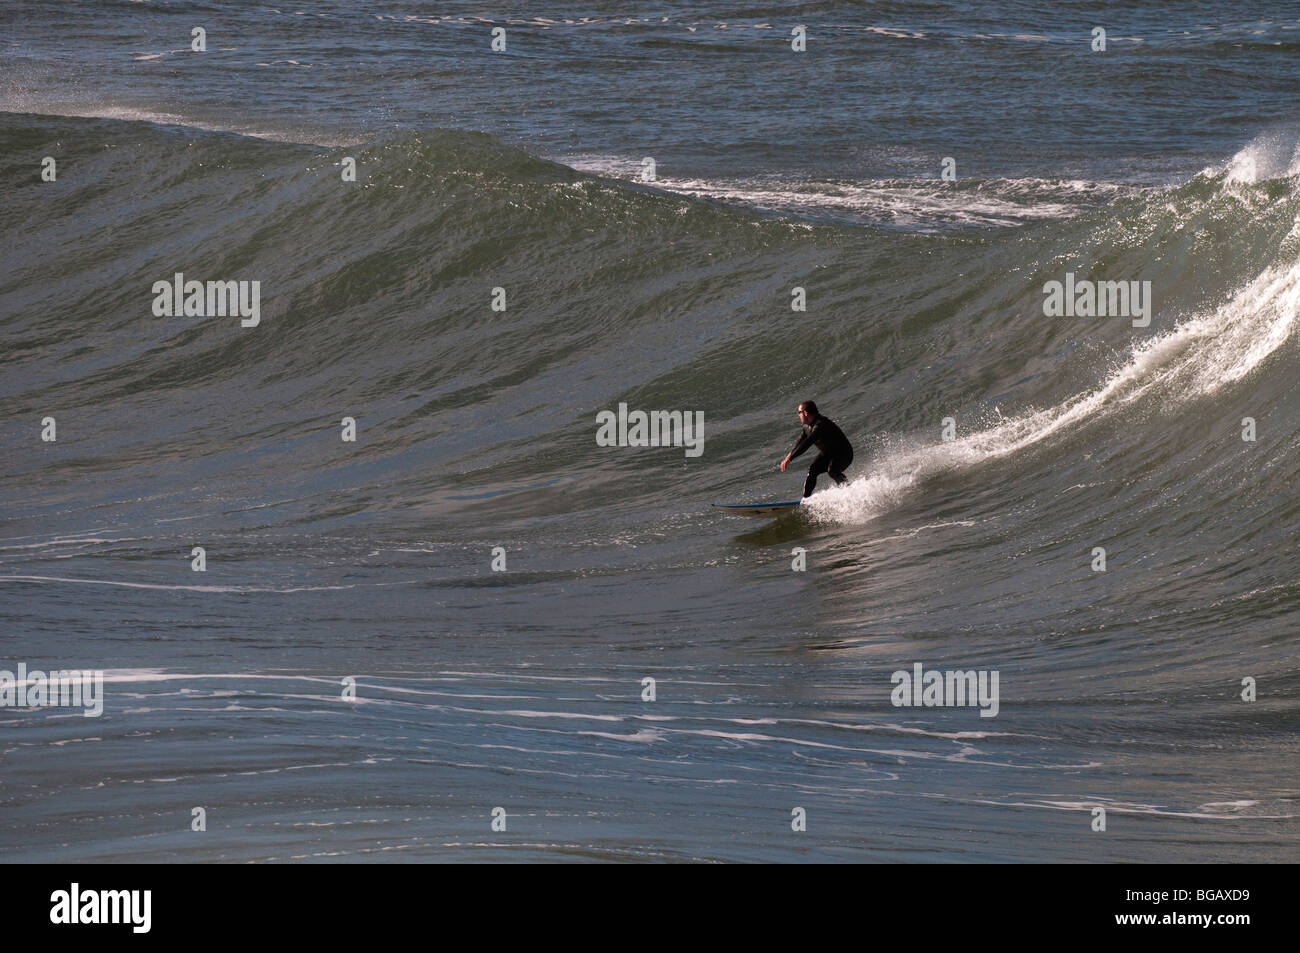 Tow-in Surfer aus Snapper Rocks, Cooloongatta, Gold Coast, Queensland, Australien Stockfoto